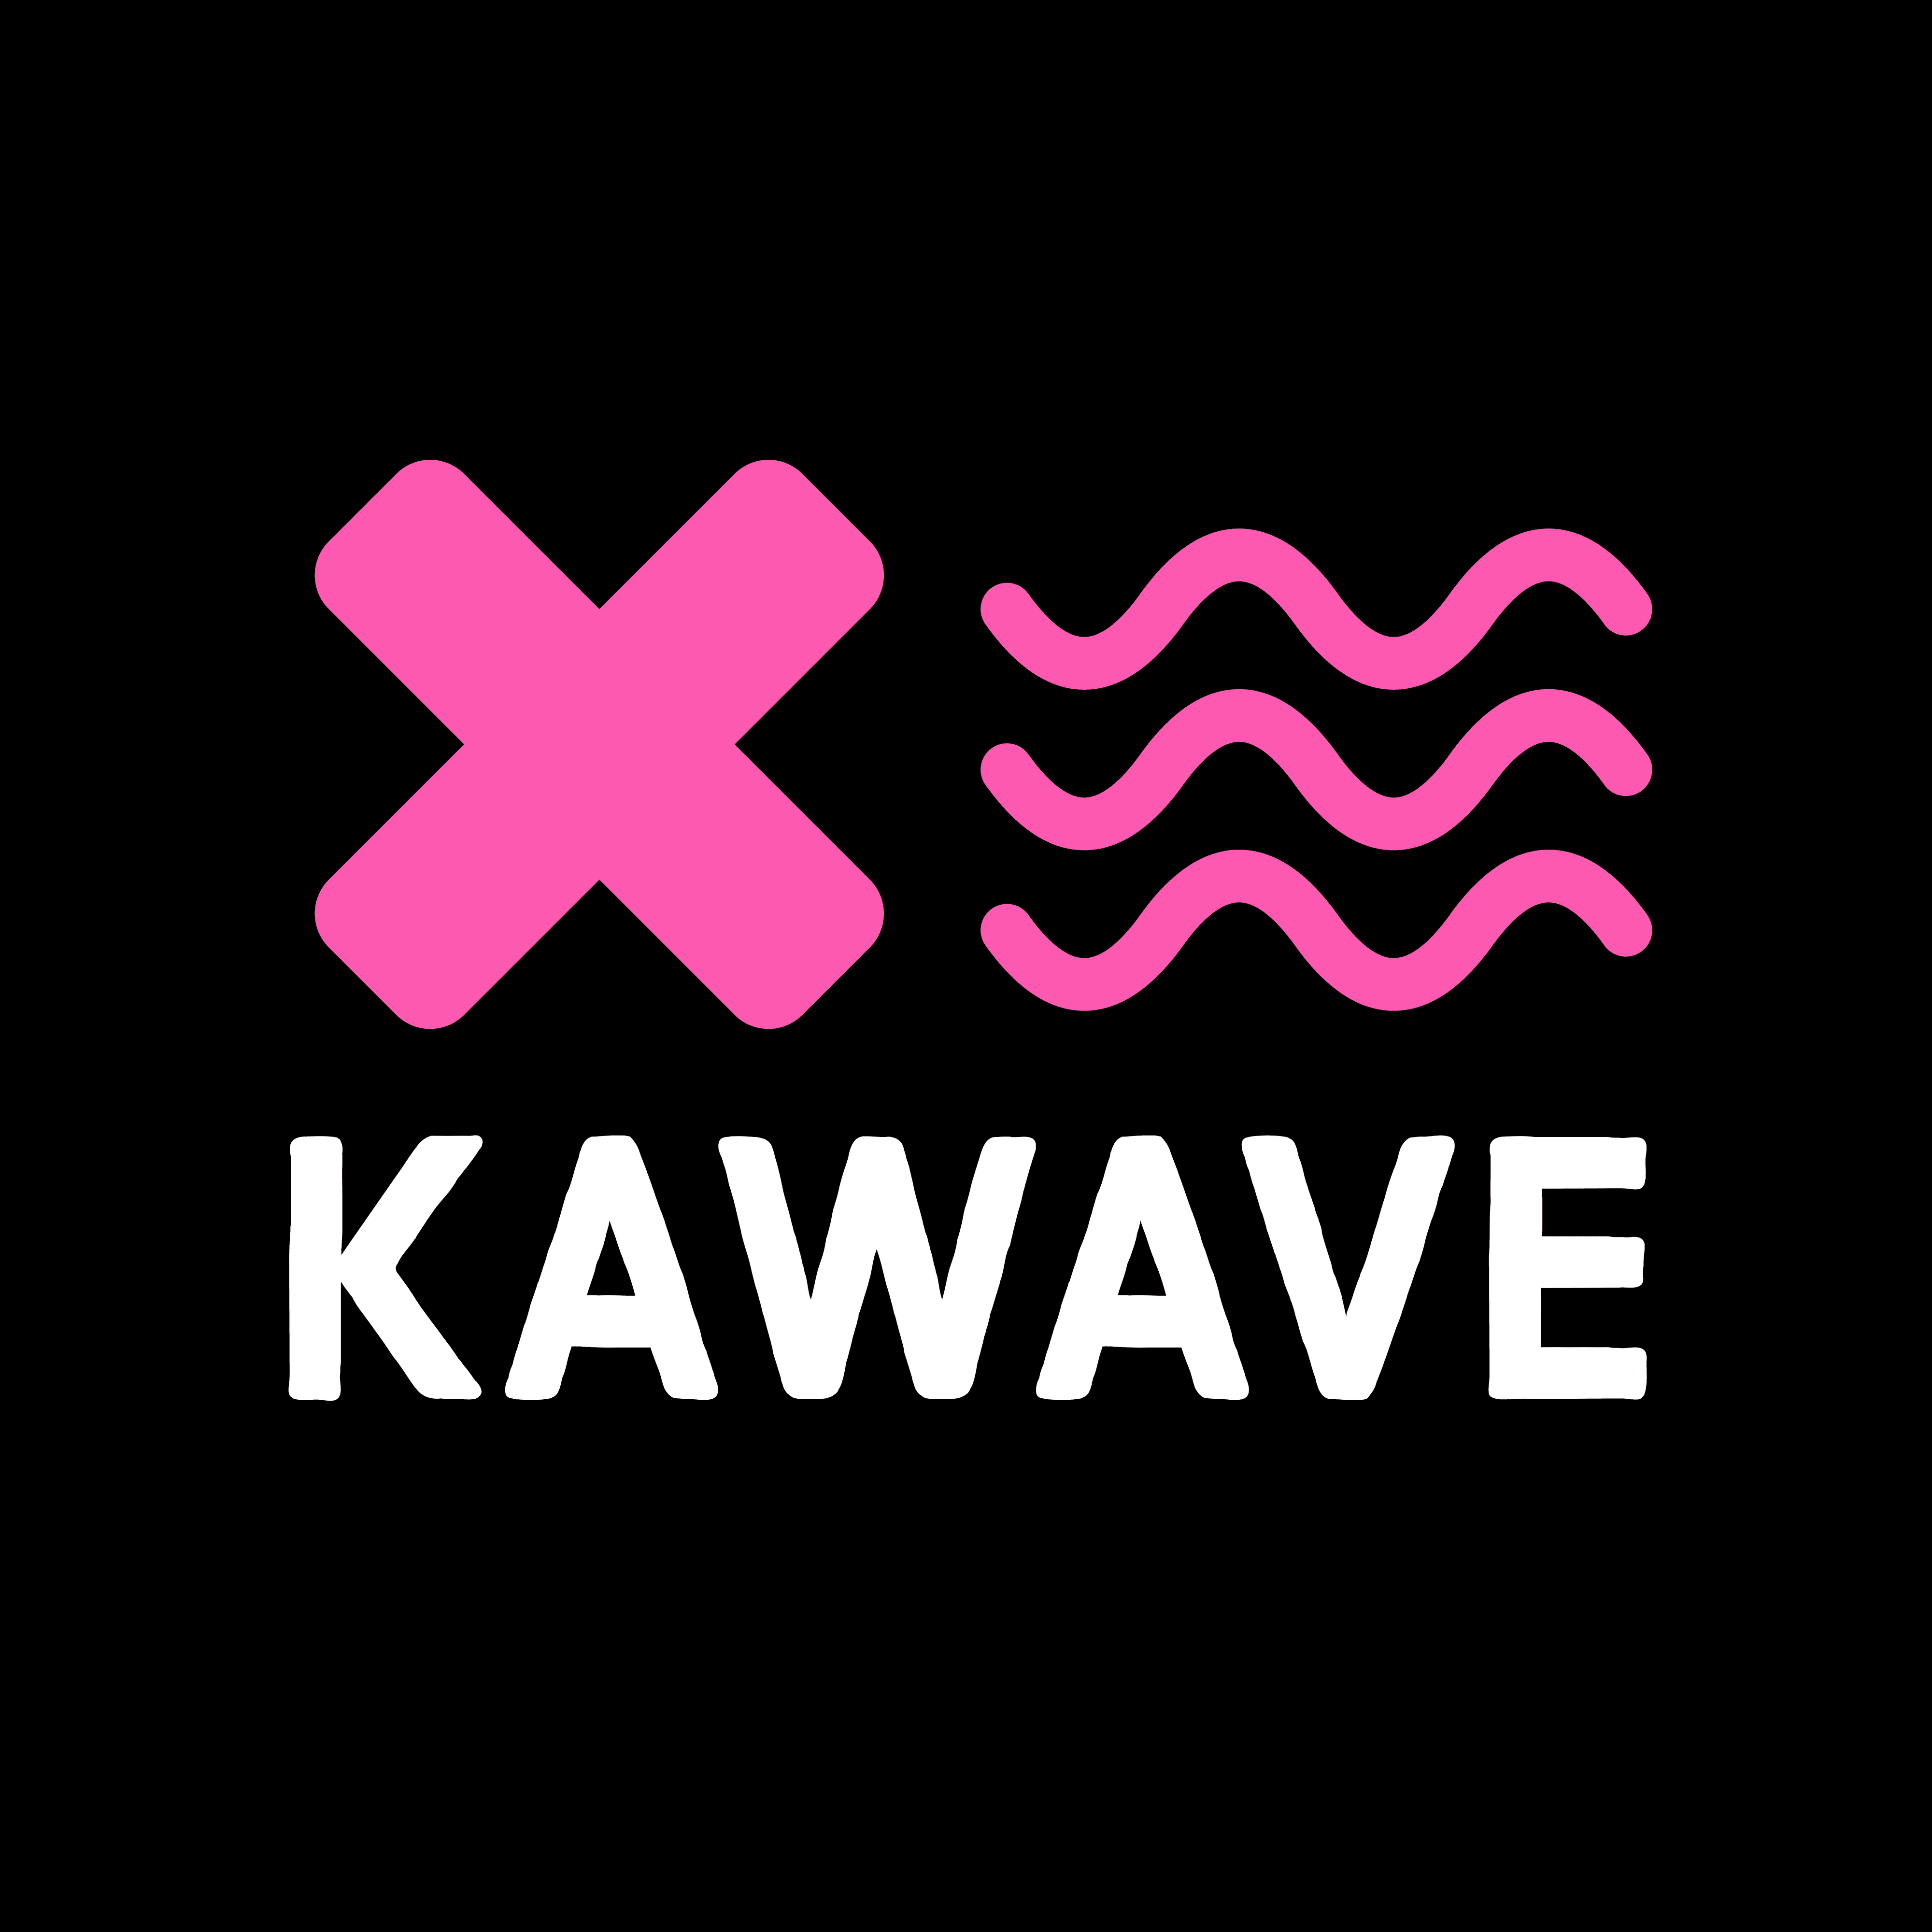 Kawave Religion